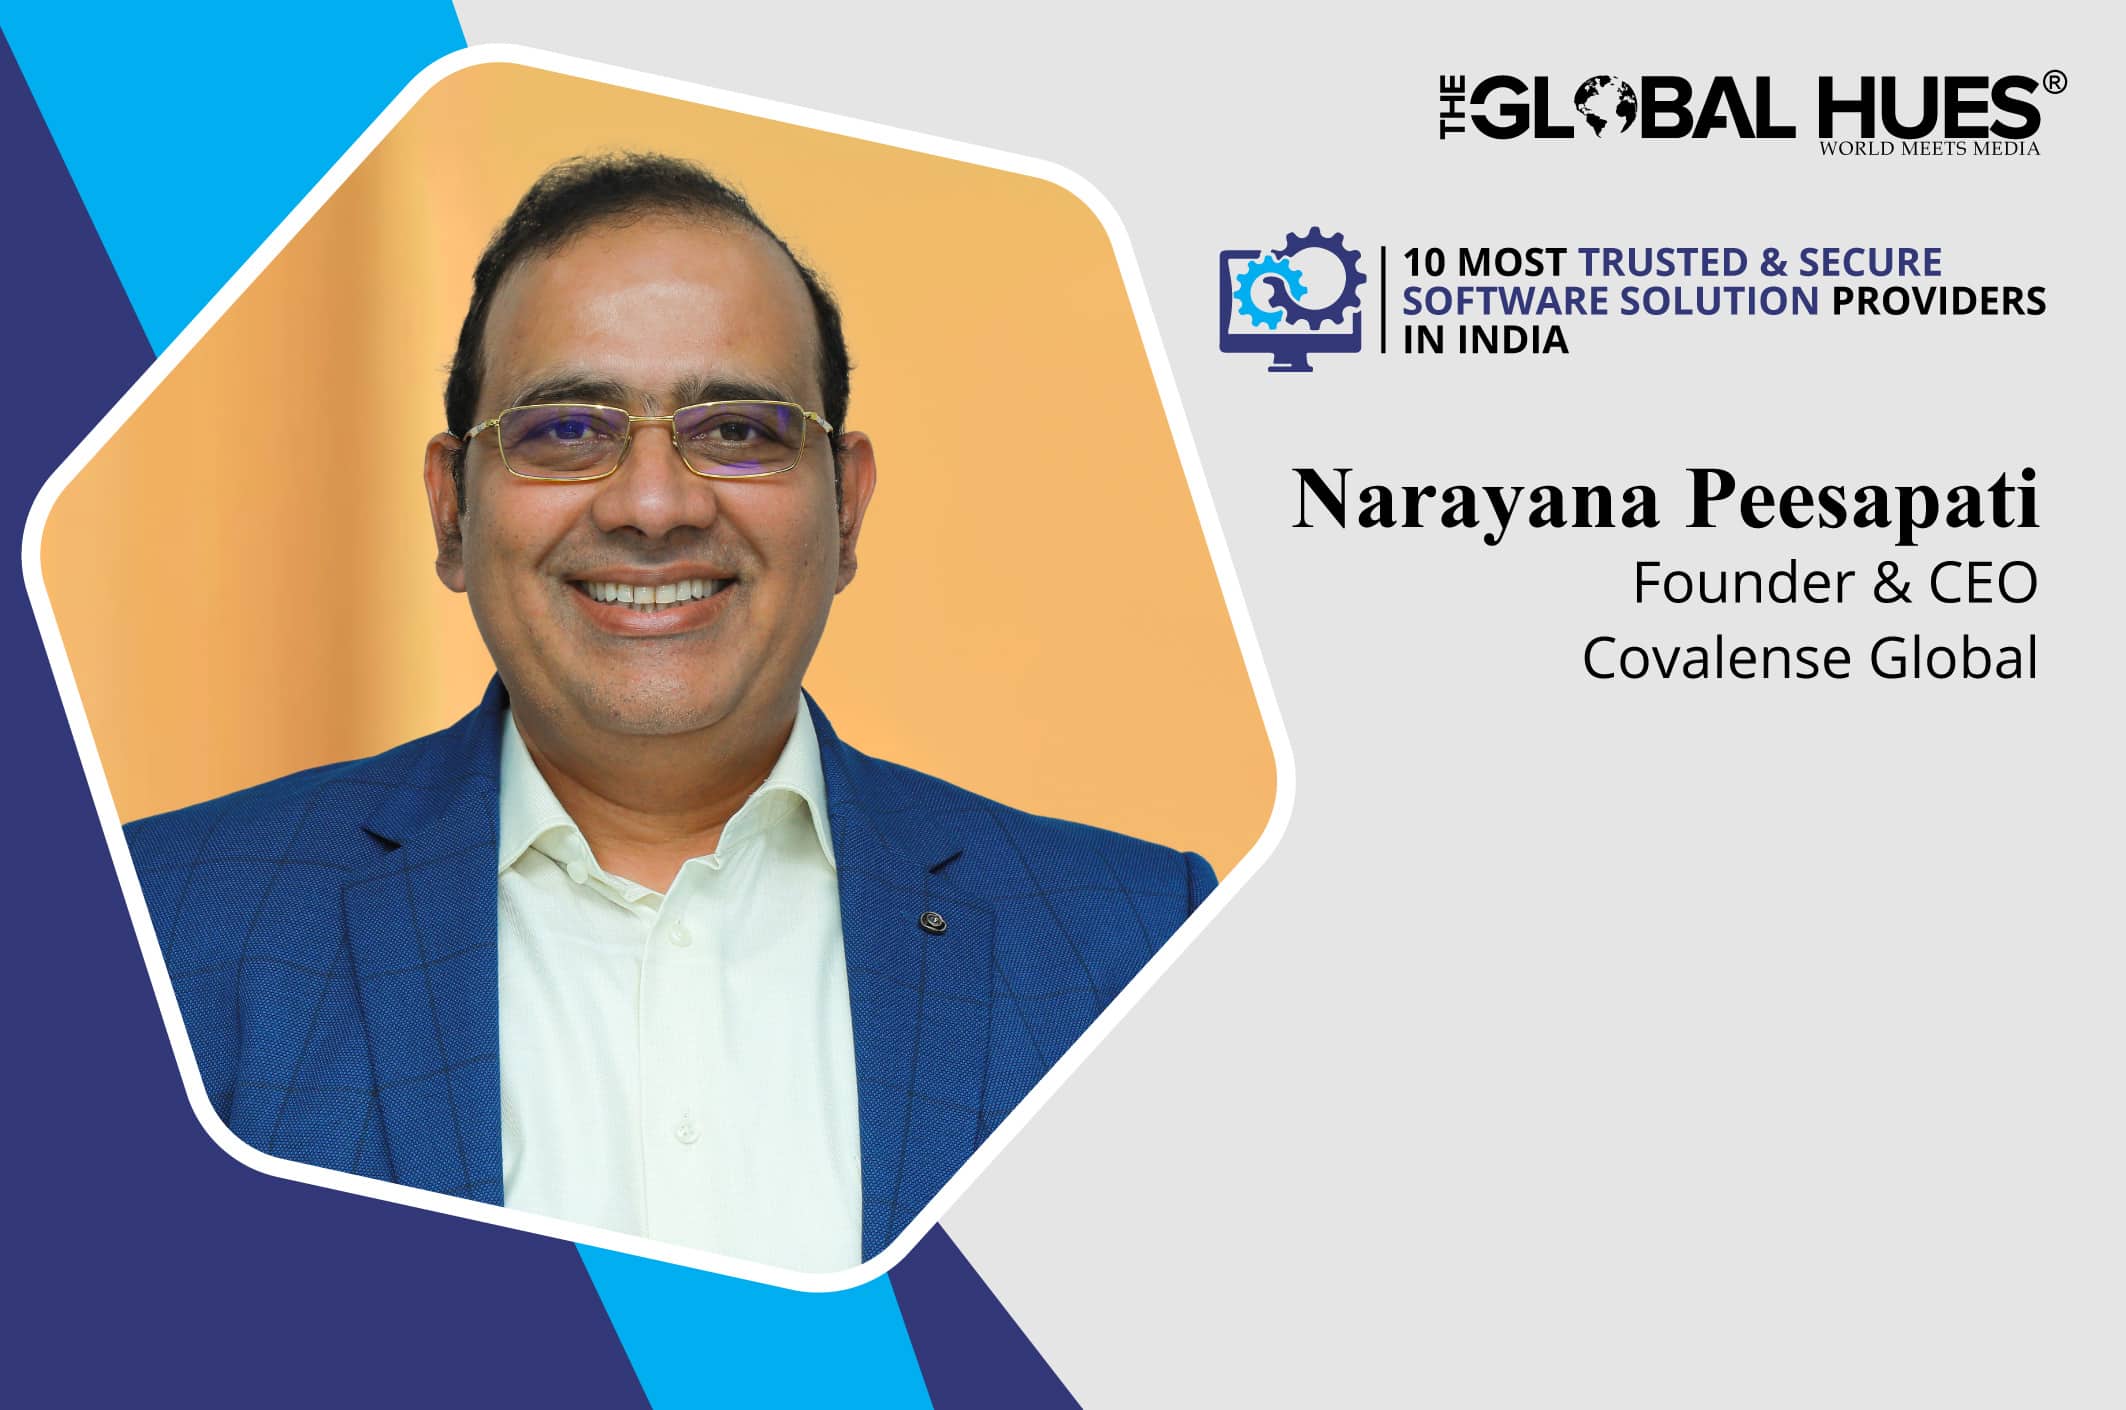 Narayana peesapati founder & Ceo Covalense Global